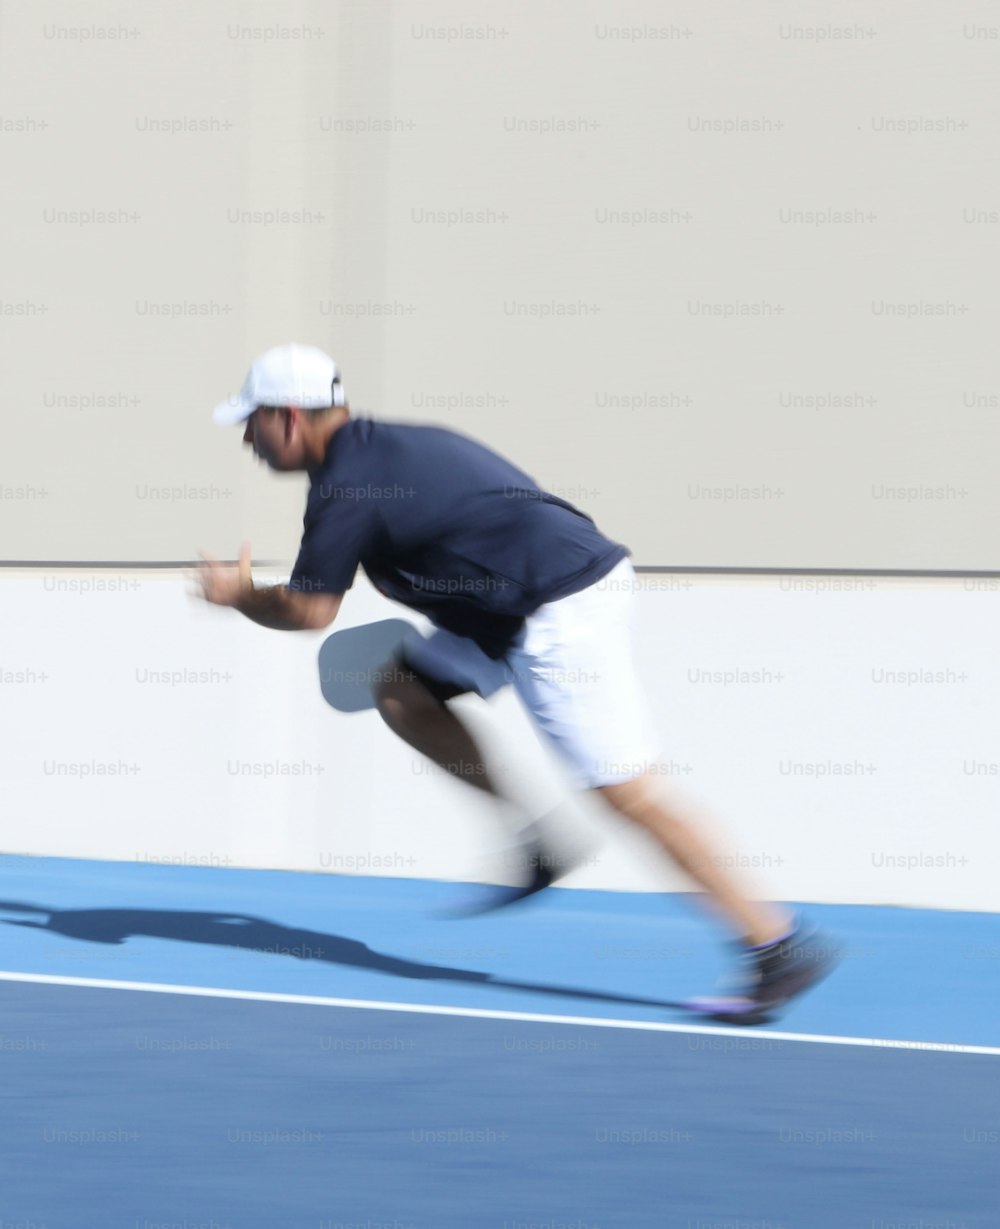 a man is running on a tennis court